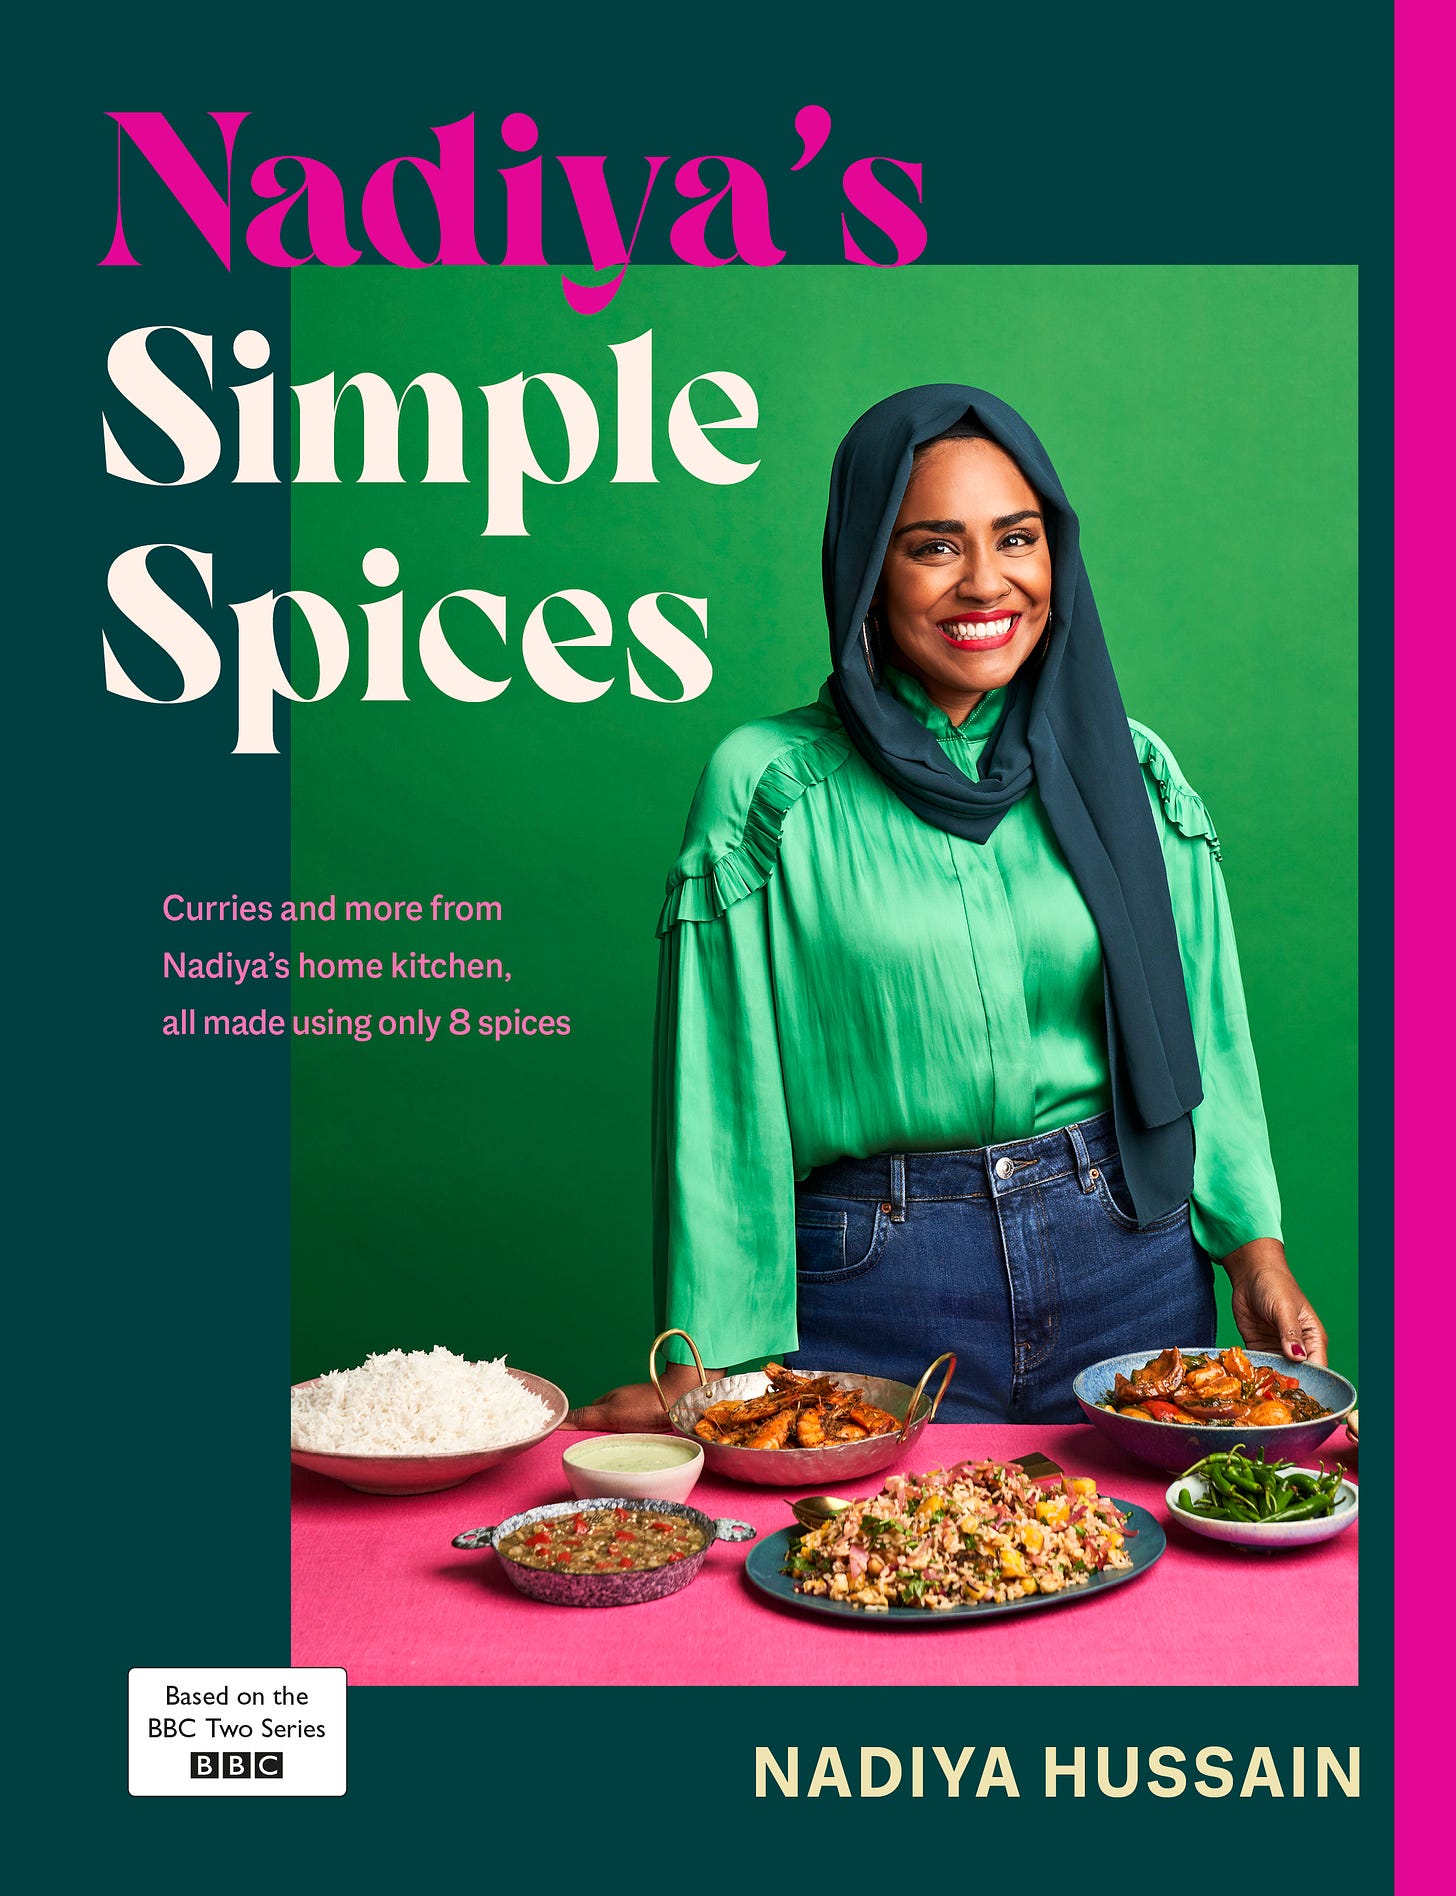 Nadiya's Simple Spices by Nadiya Hussain